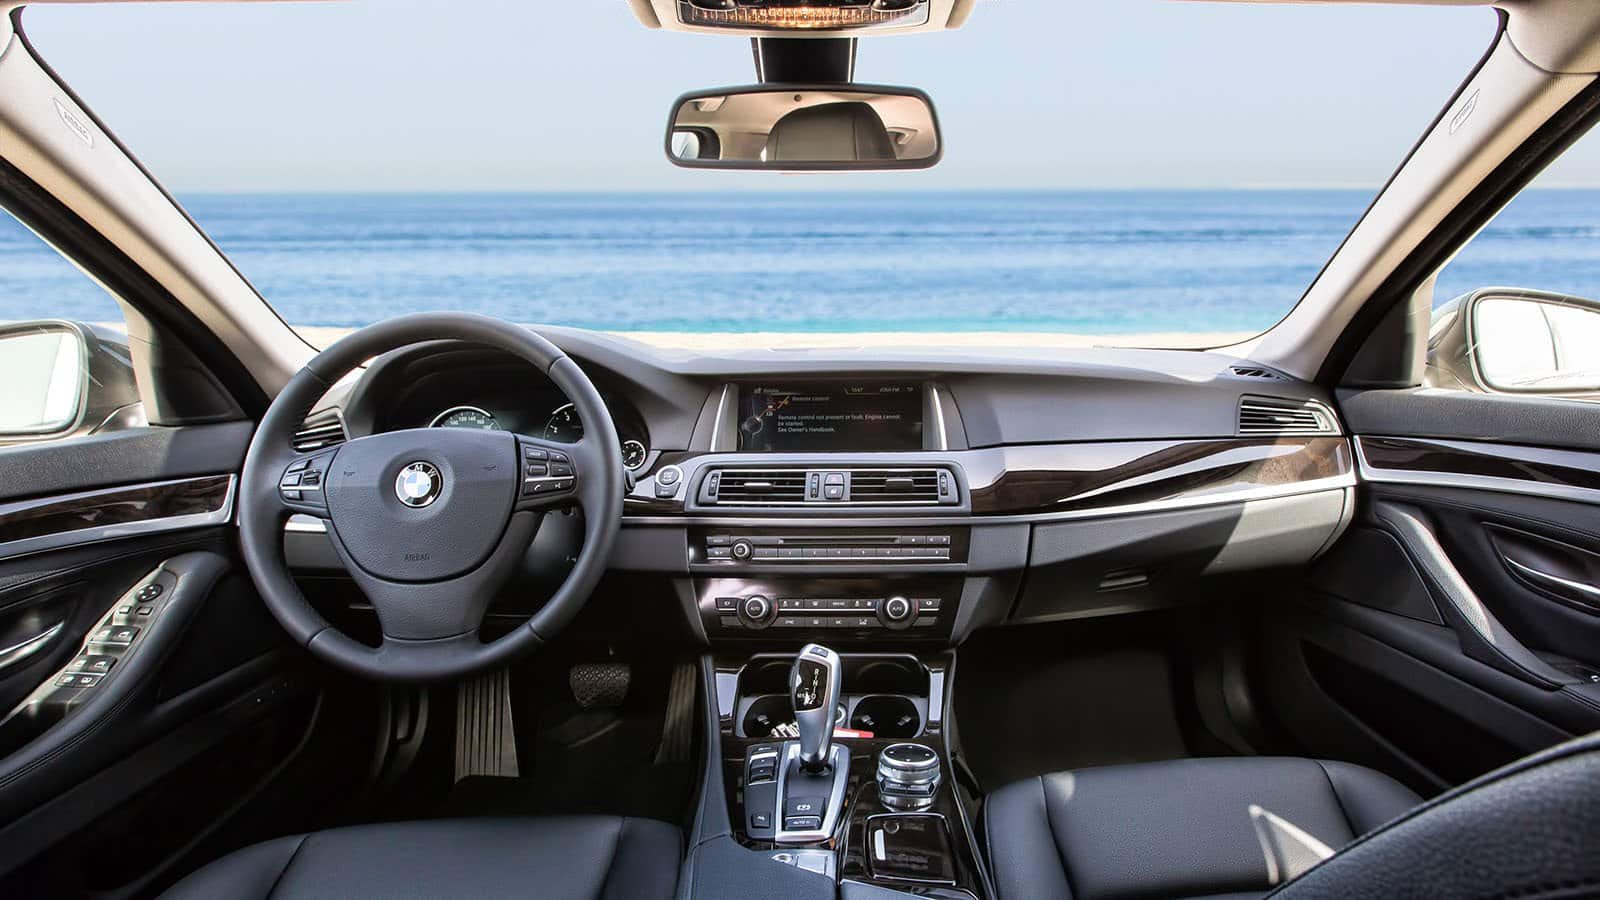 BMW 520i Rental Car Dubai